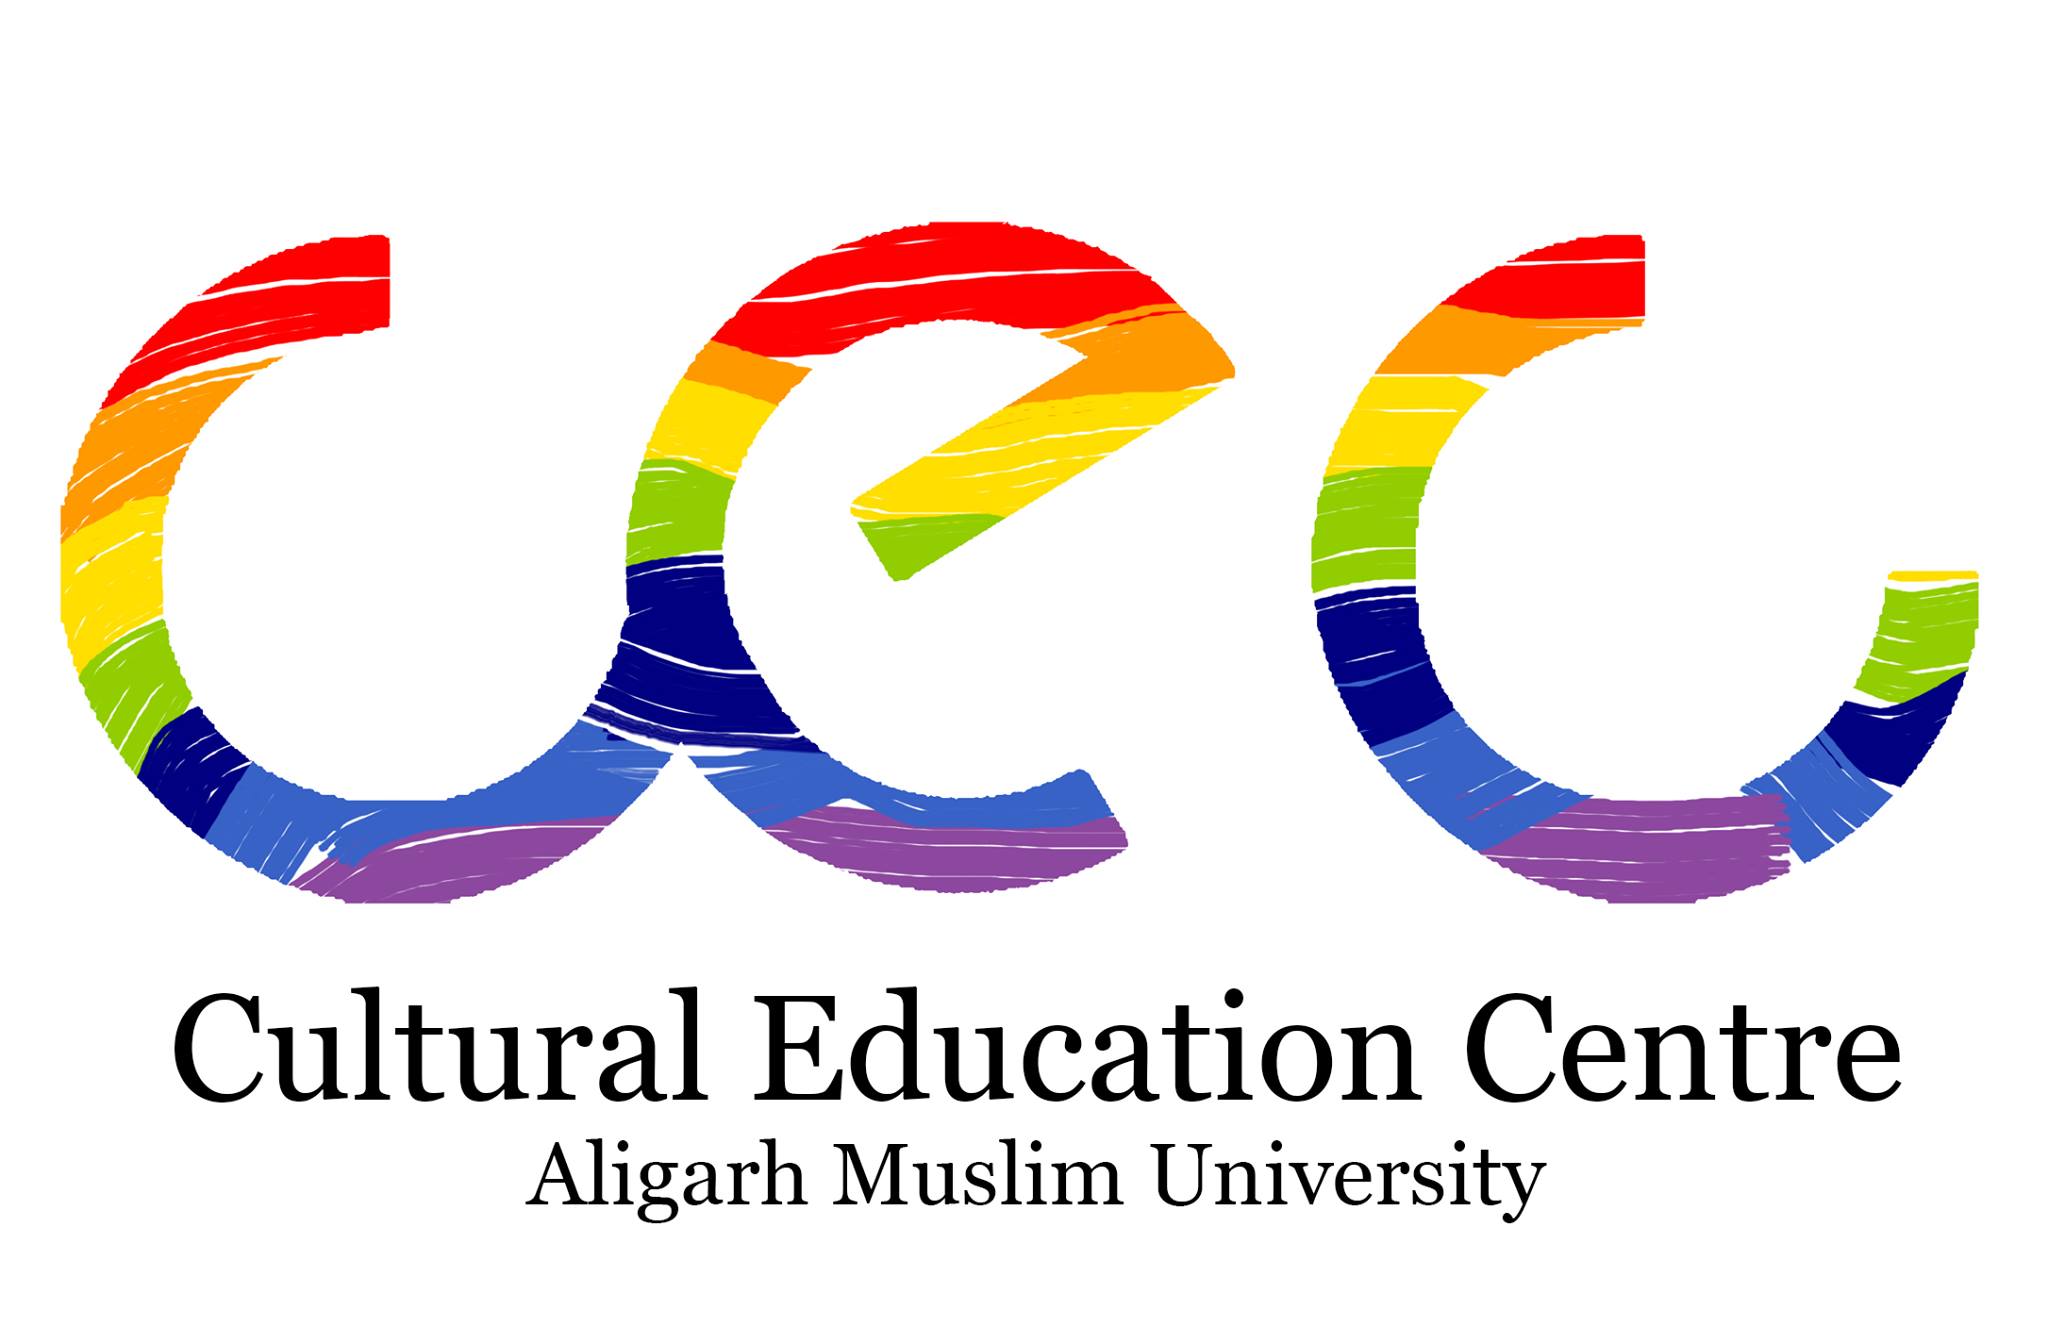 CEC Logo - File:CEC logo by sarim ashrafi.jpg - Wikimedia Commons